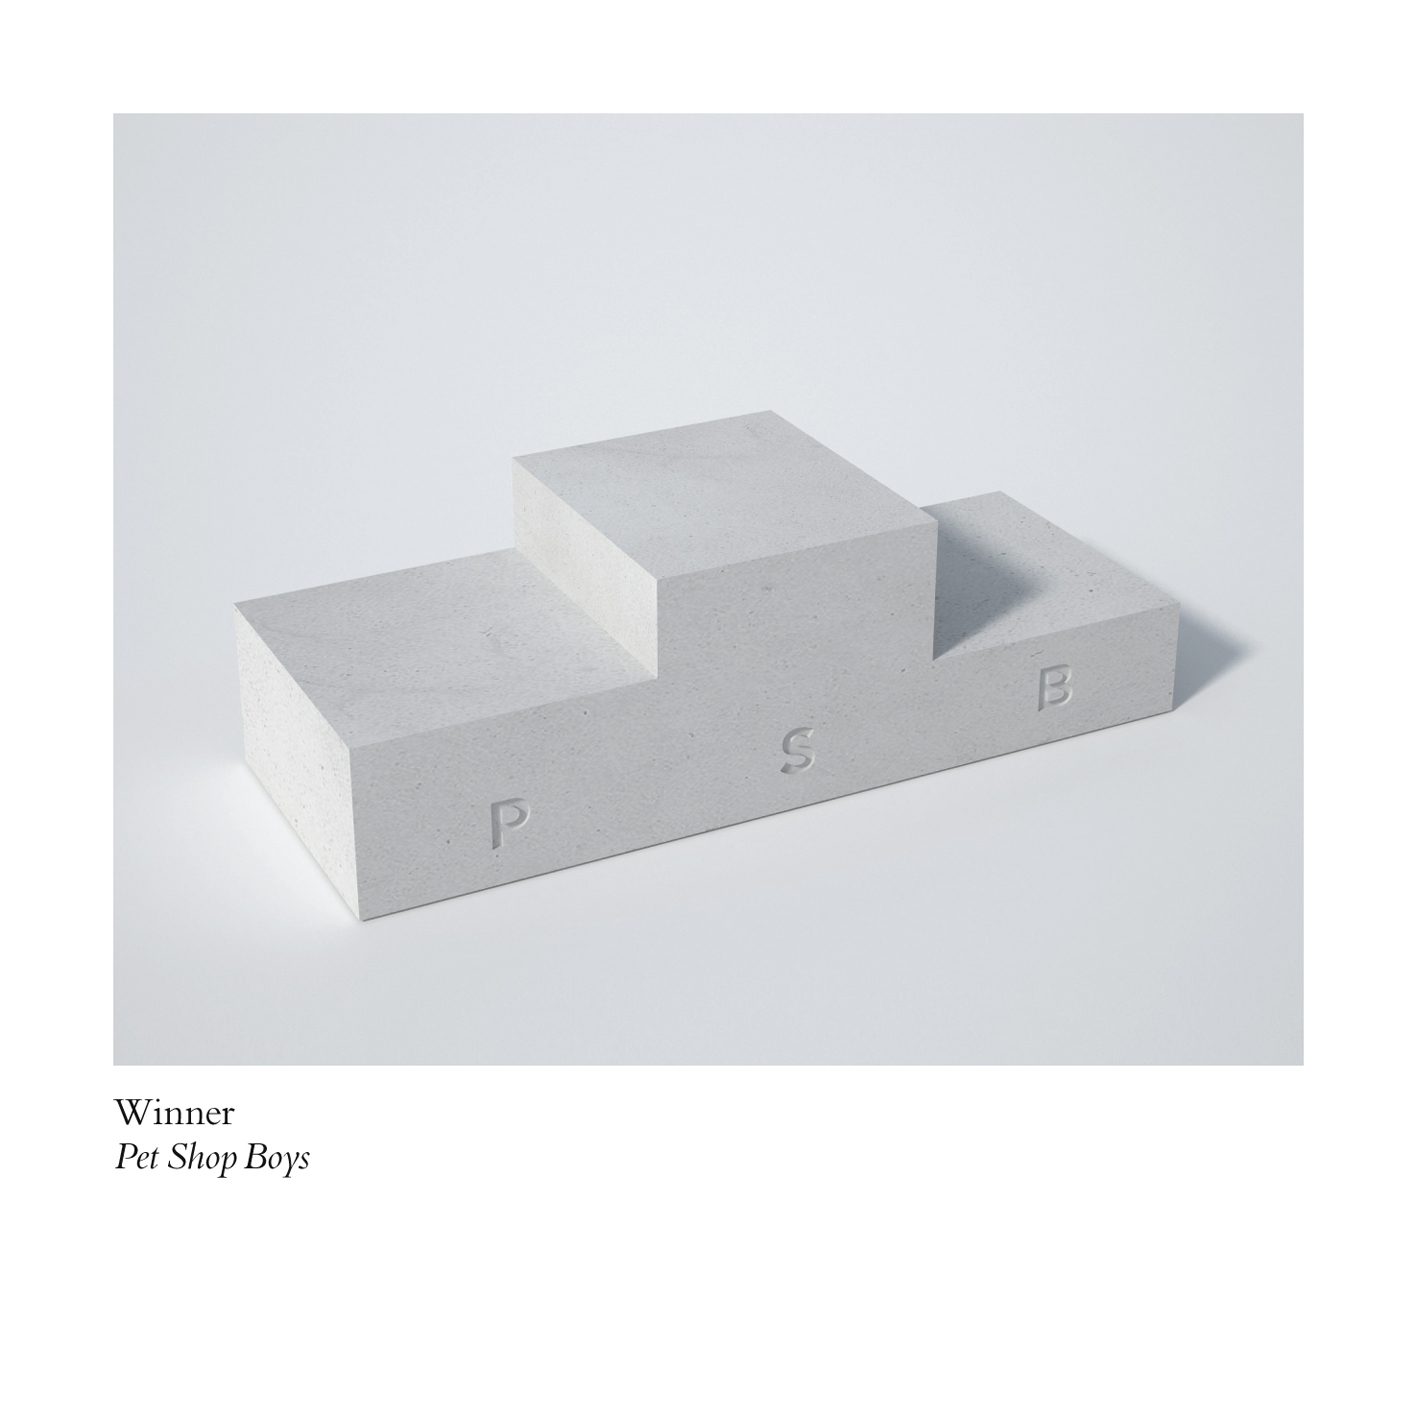  Pet Shop Boys - Winner (2012) EP